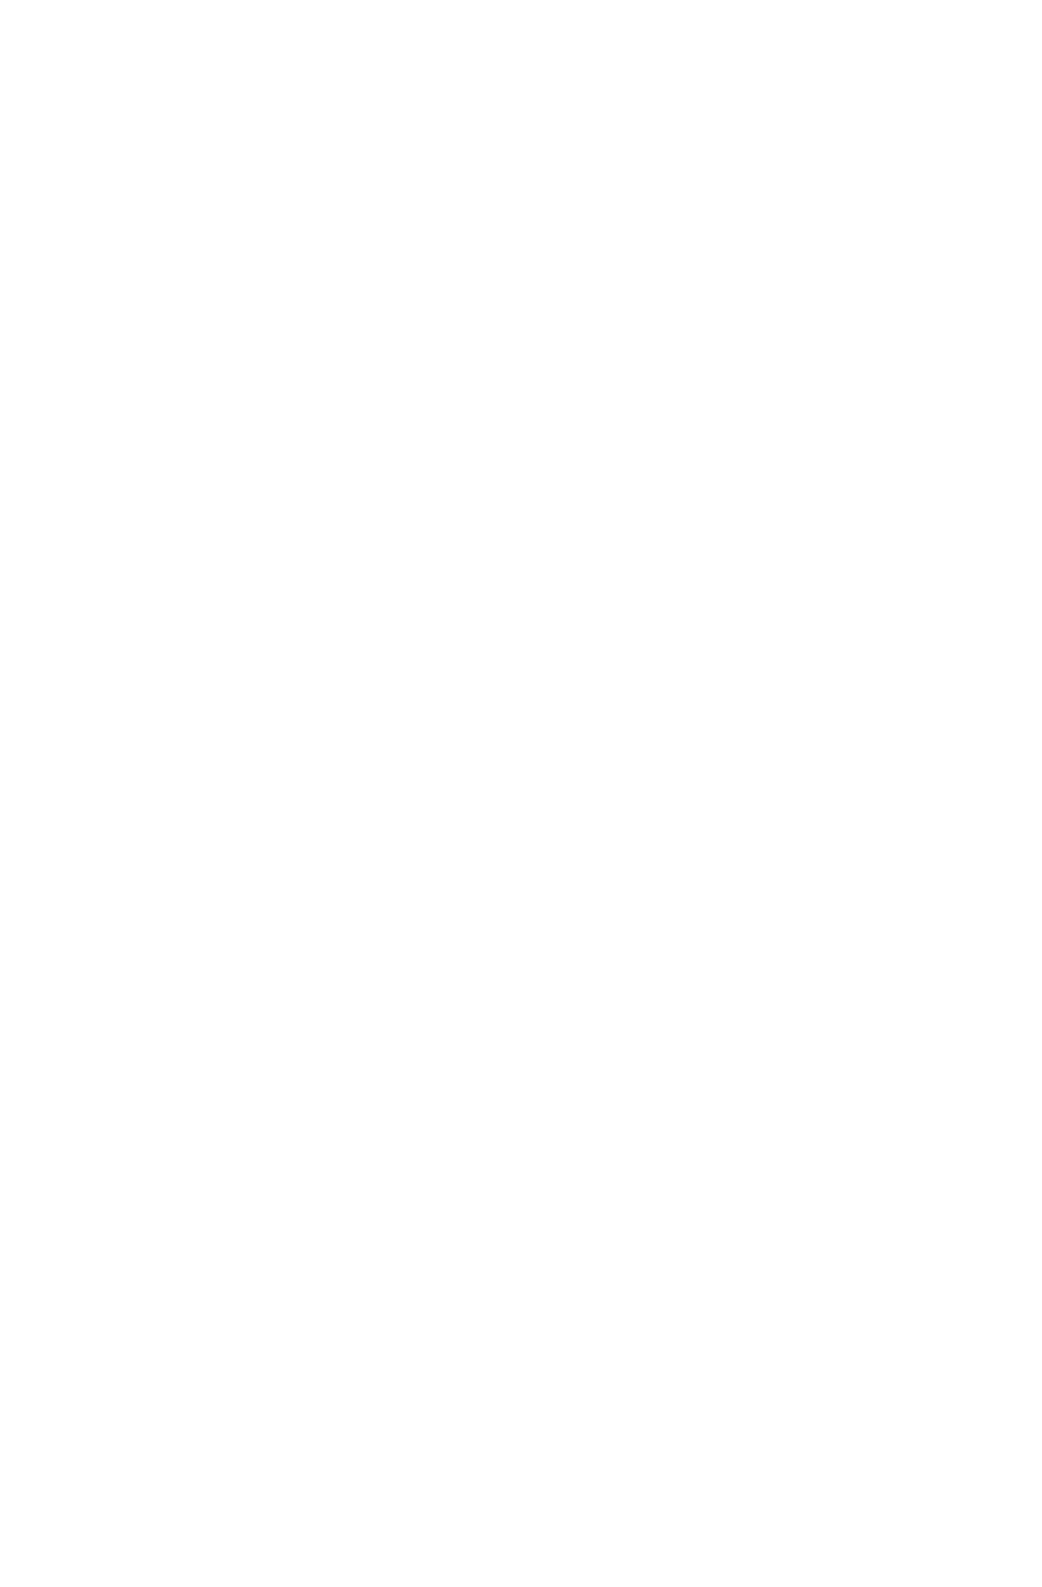 Erie Indemnity logo pour fonds sombres (PNG transparent)